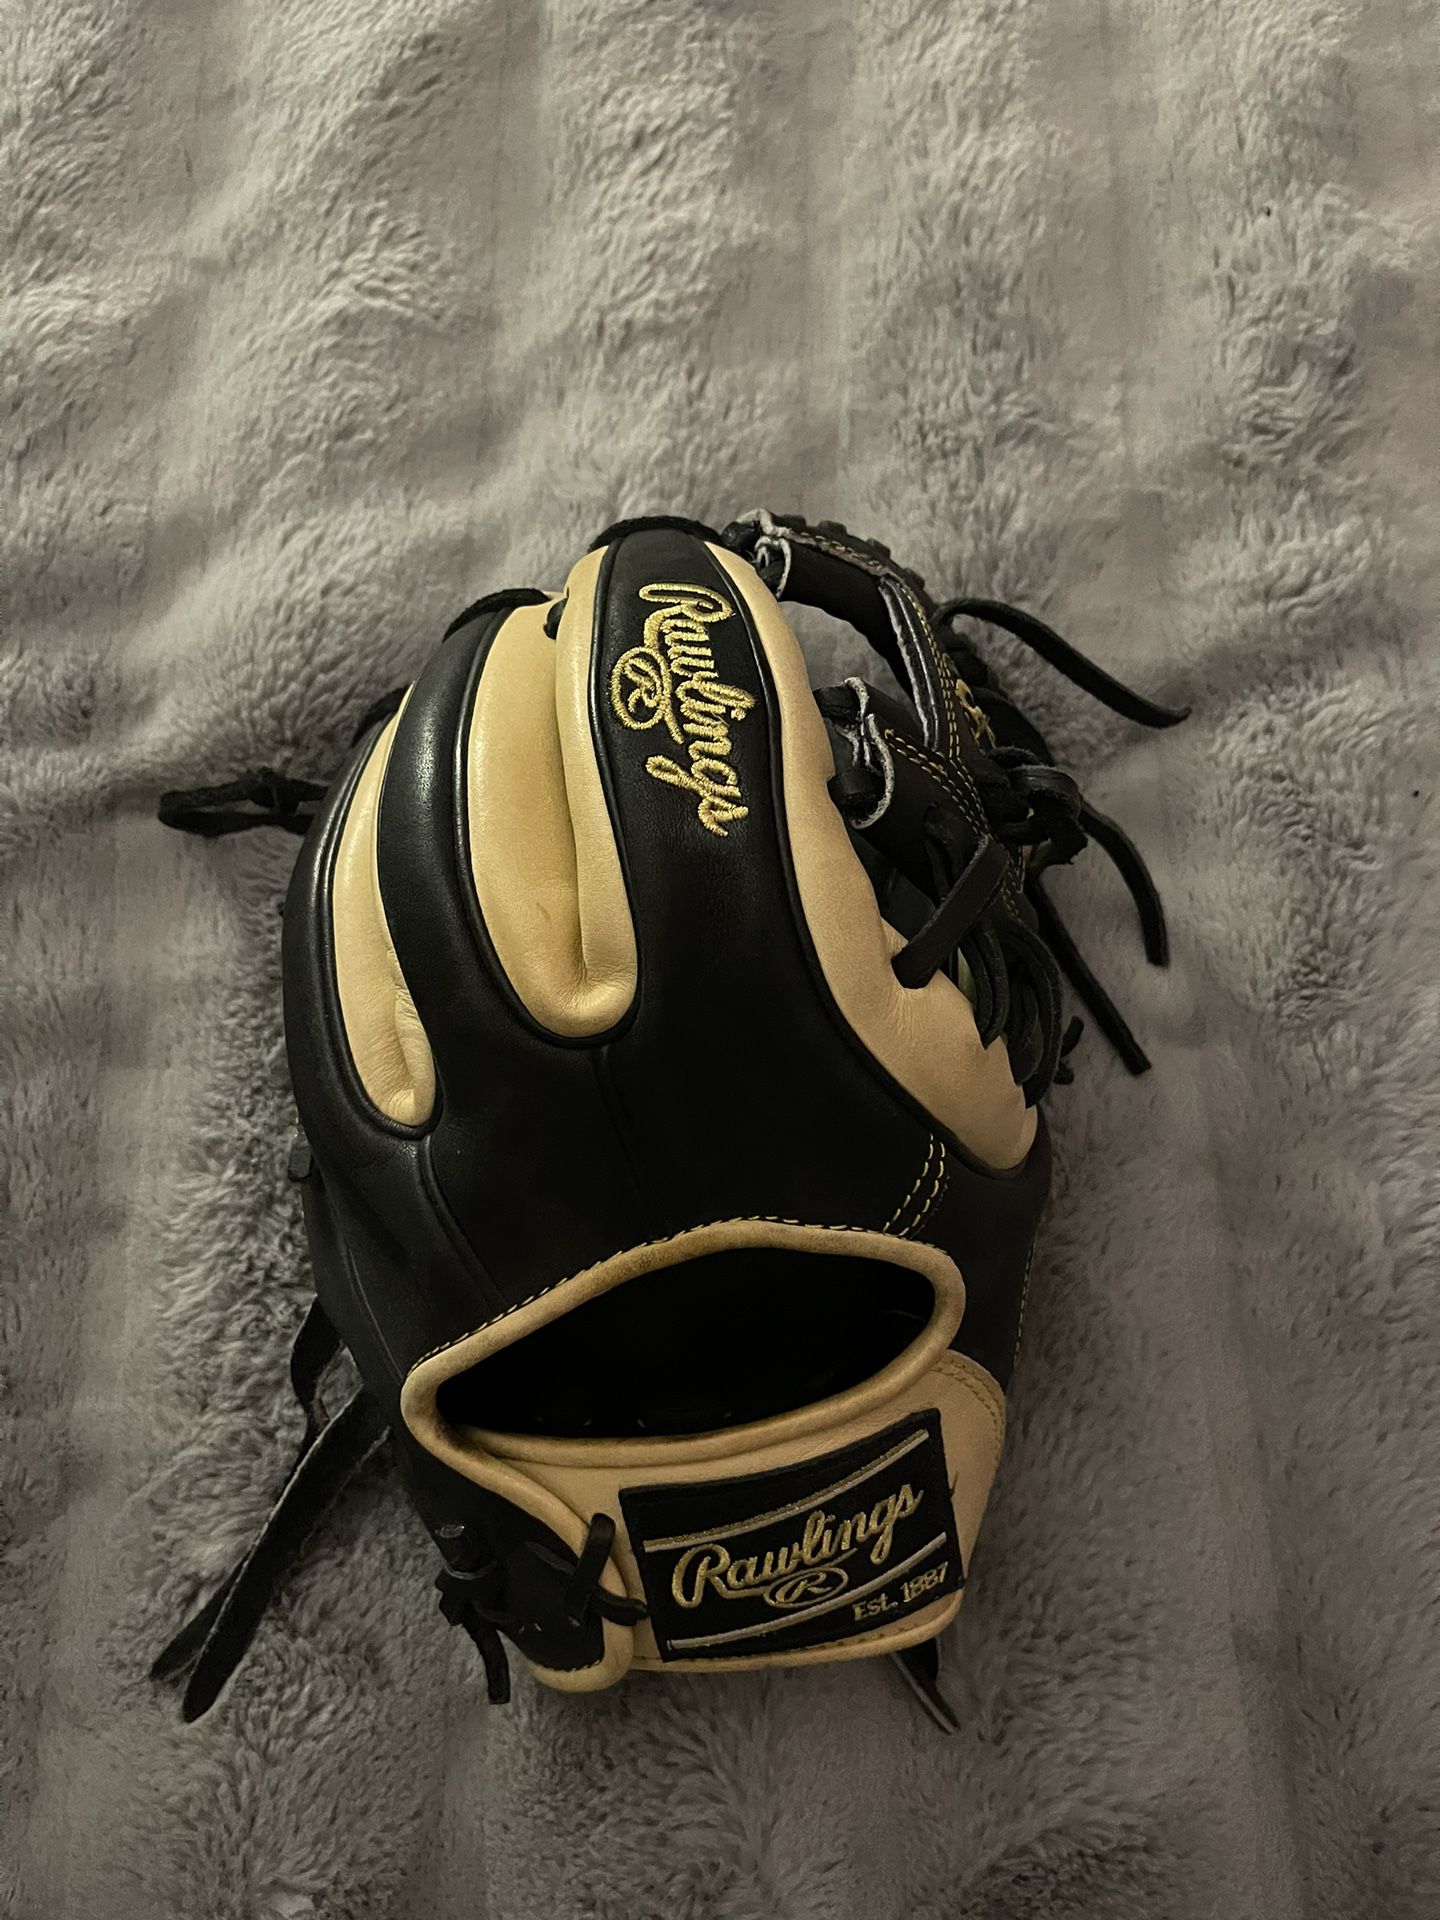 Rawlings HOH baseball glove 